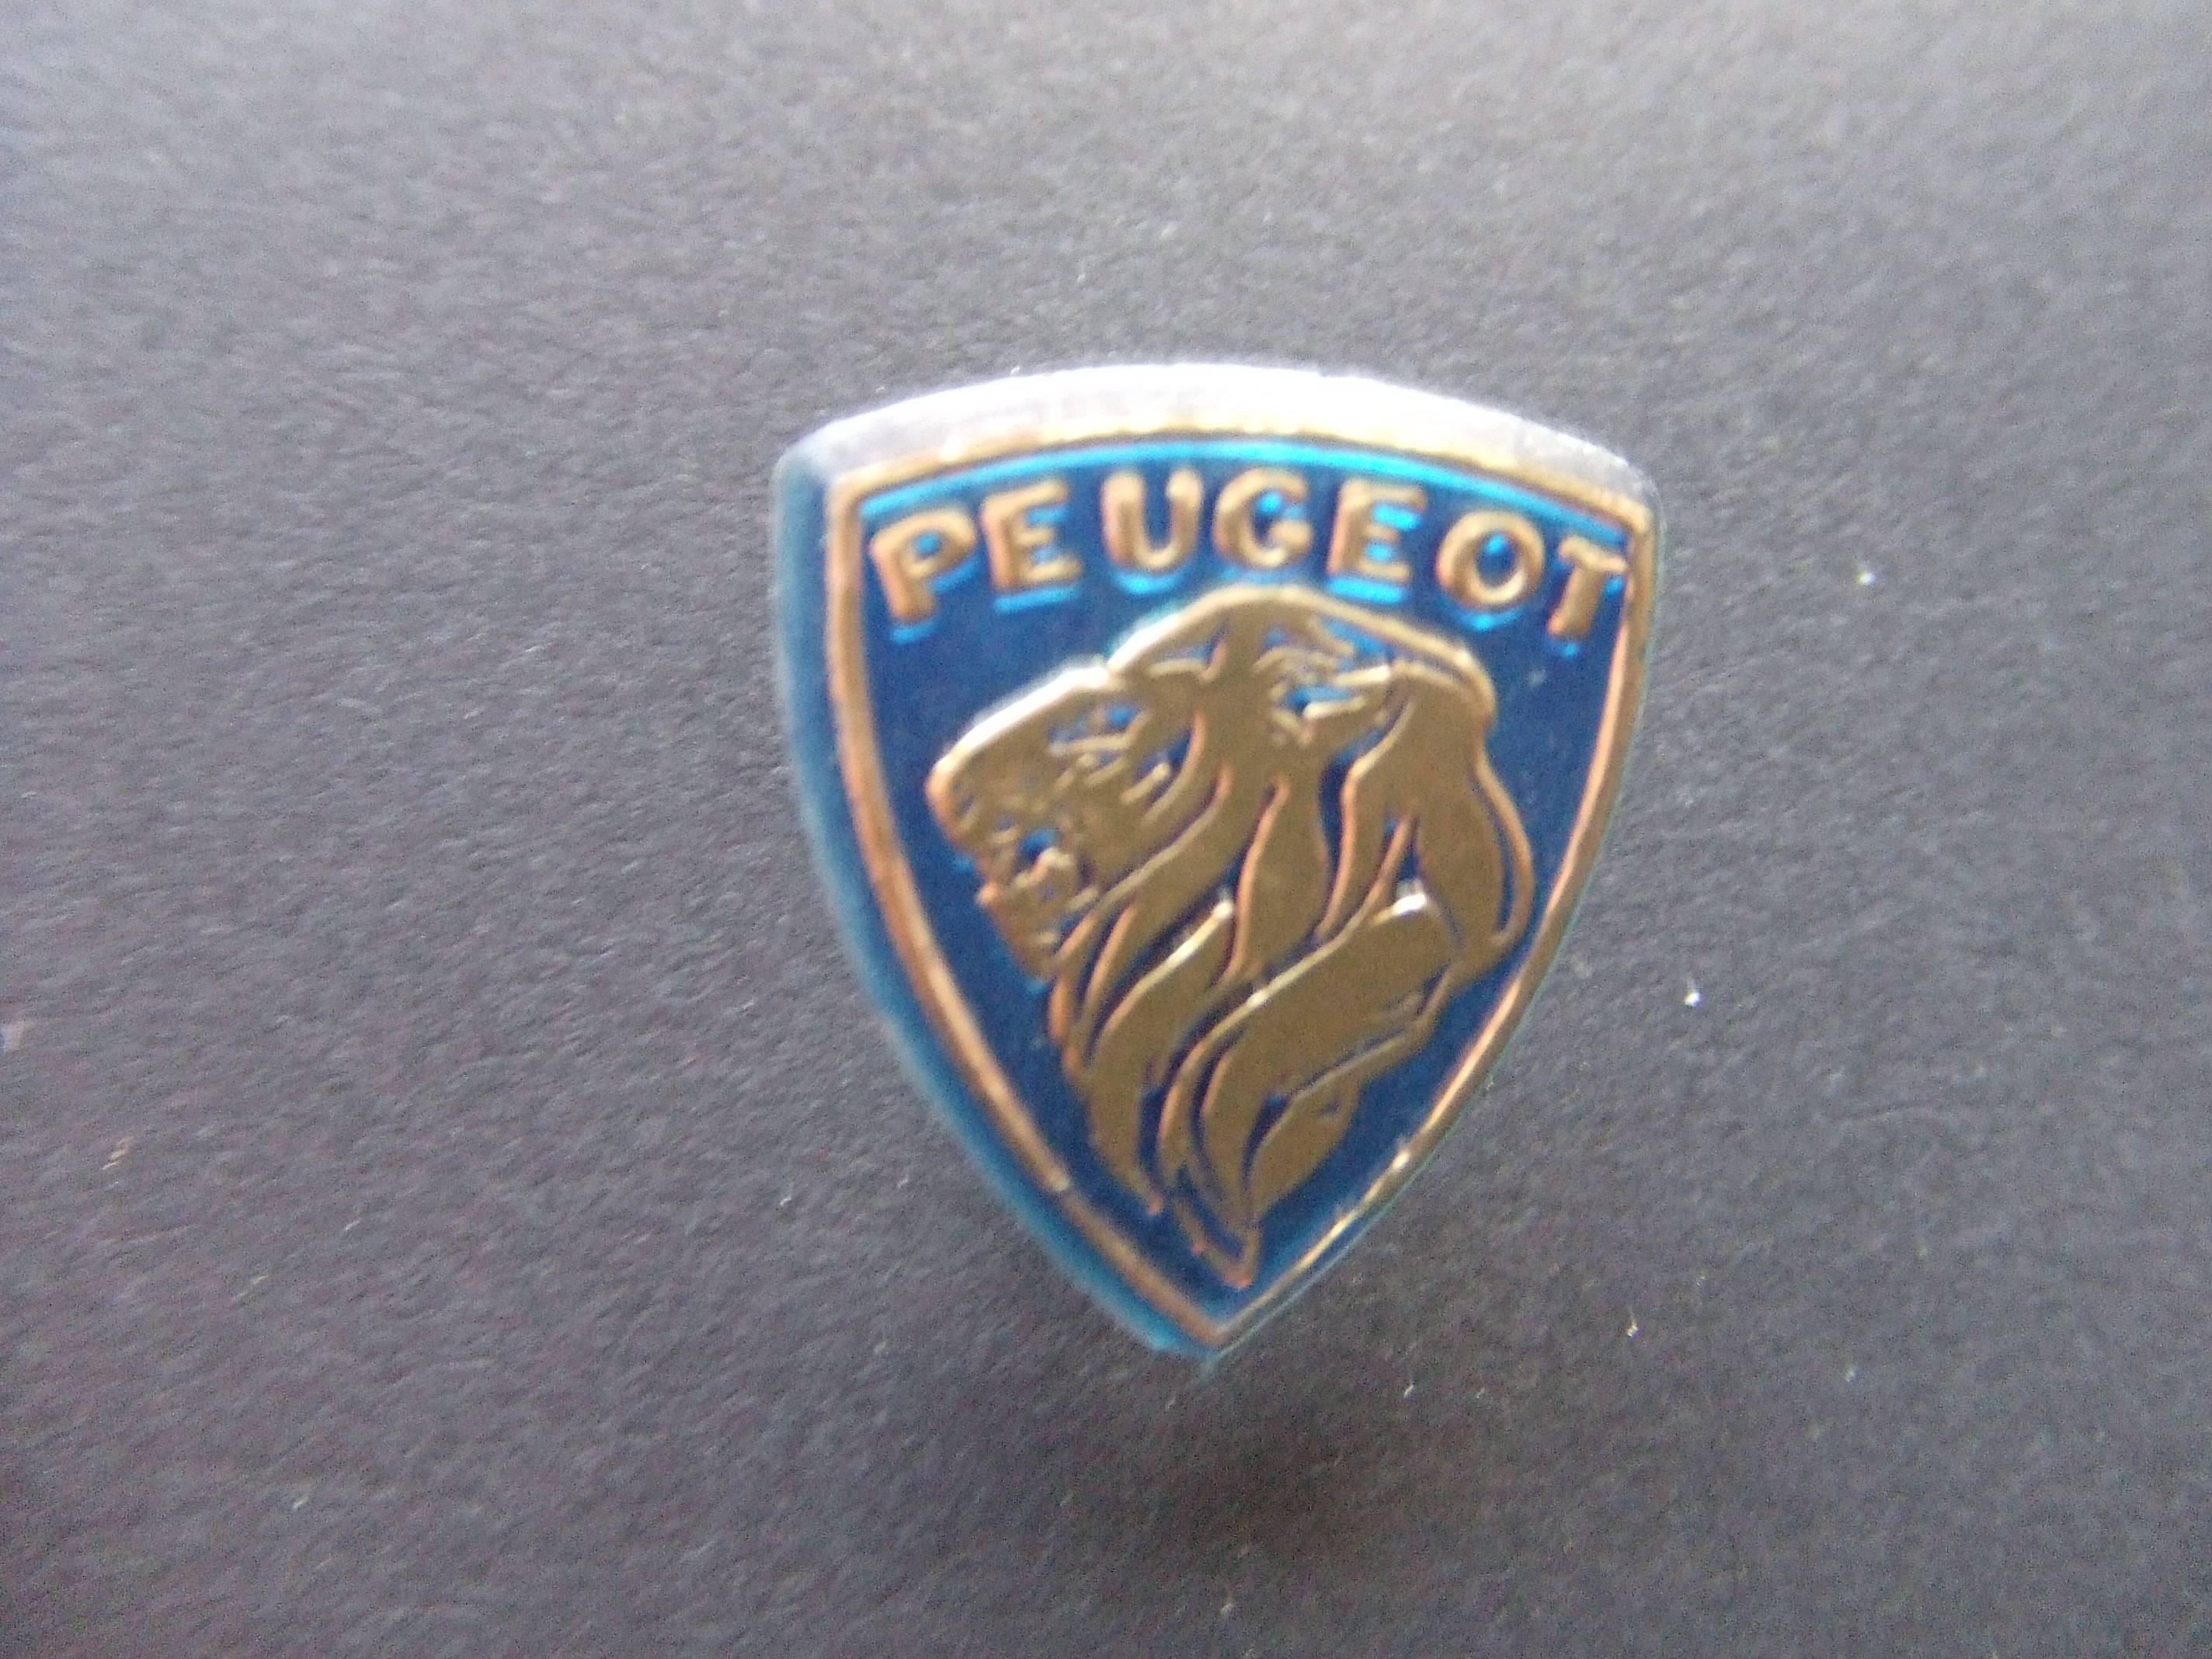 Peugeot logo blauw-goudkleurig